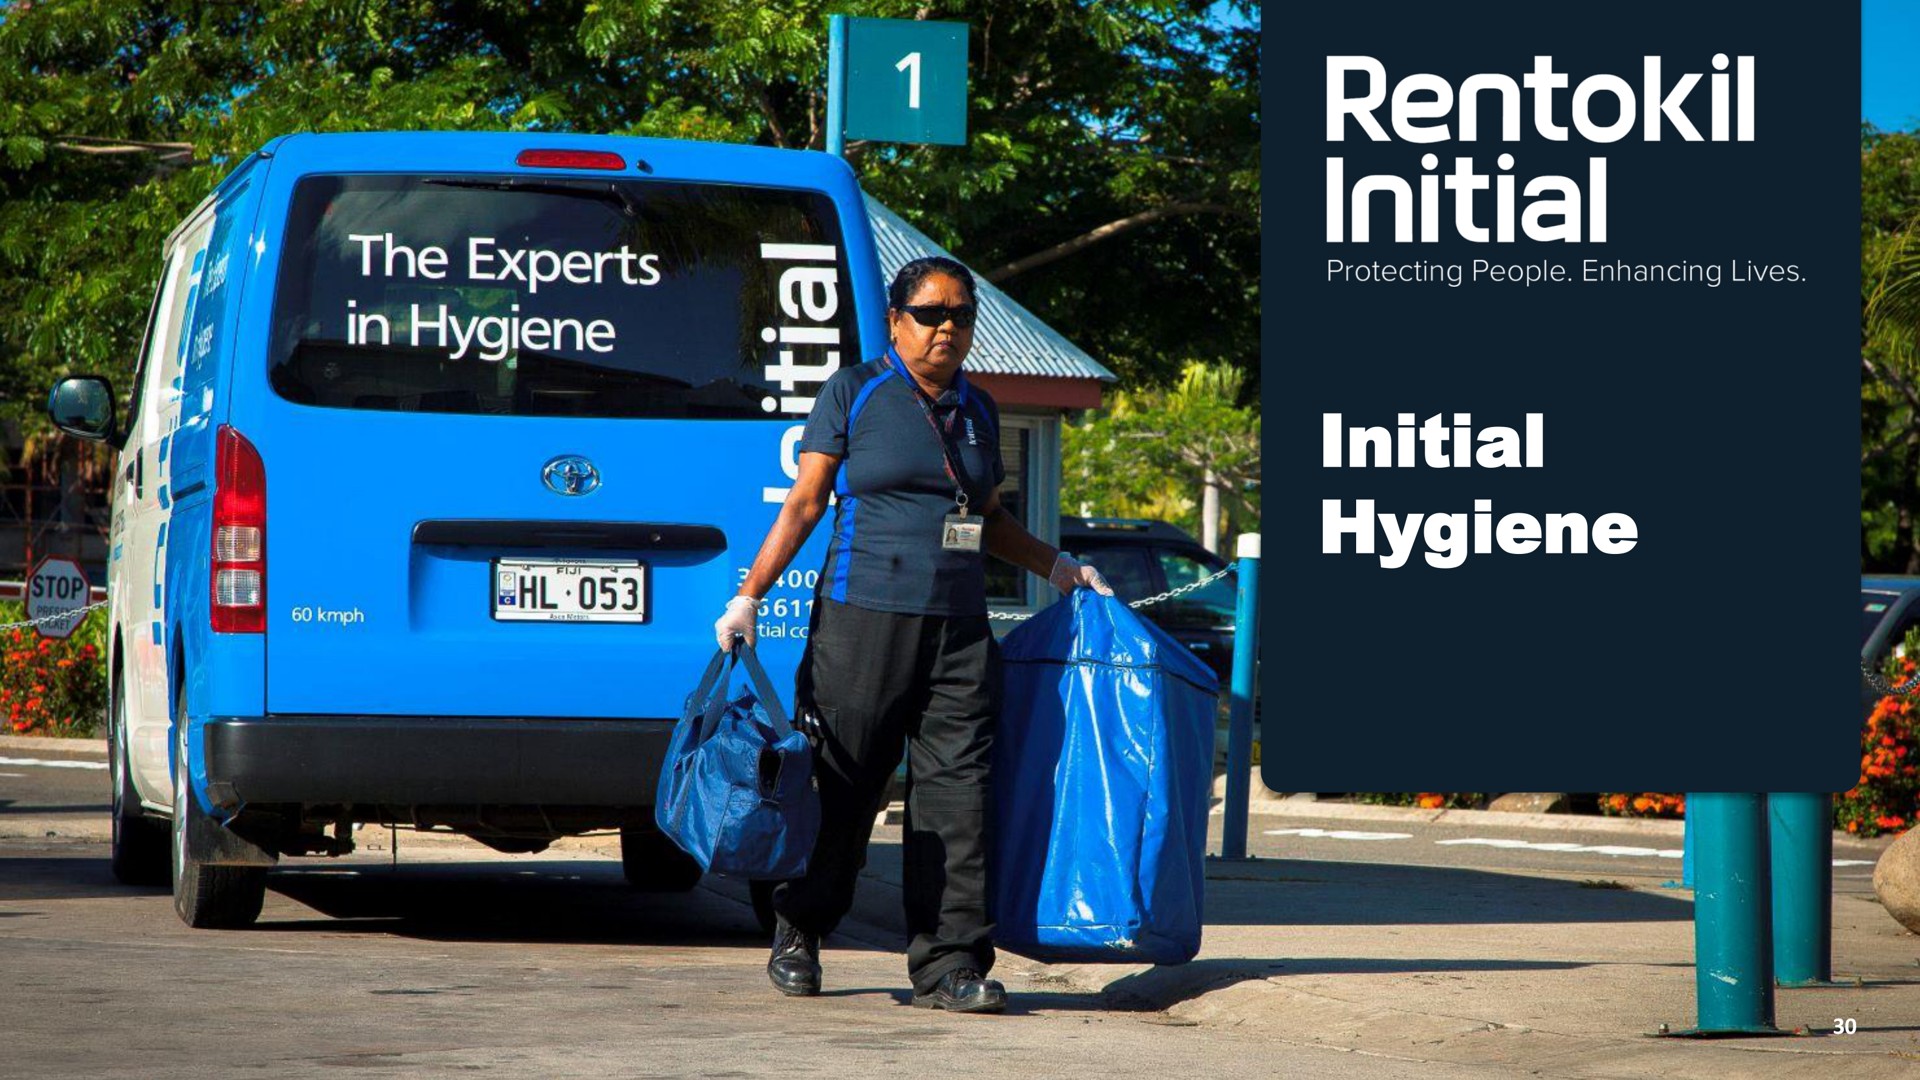 initial hygiene a a | Rentokil Initial